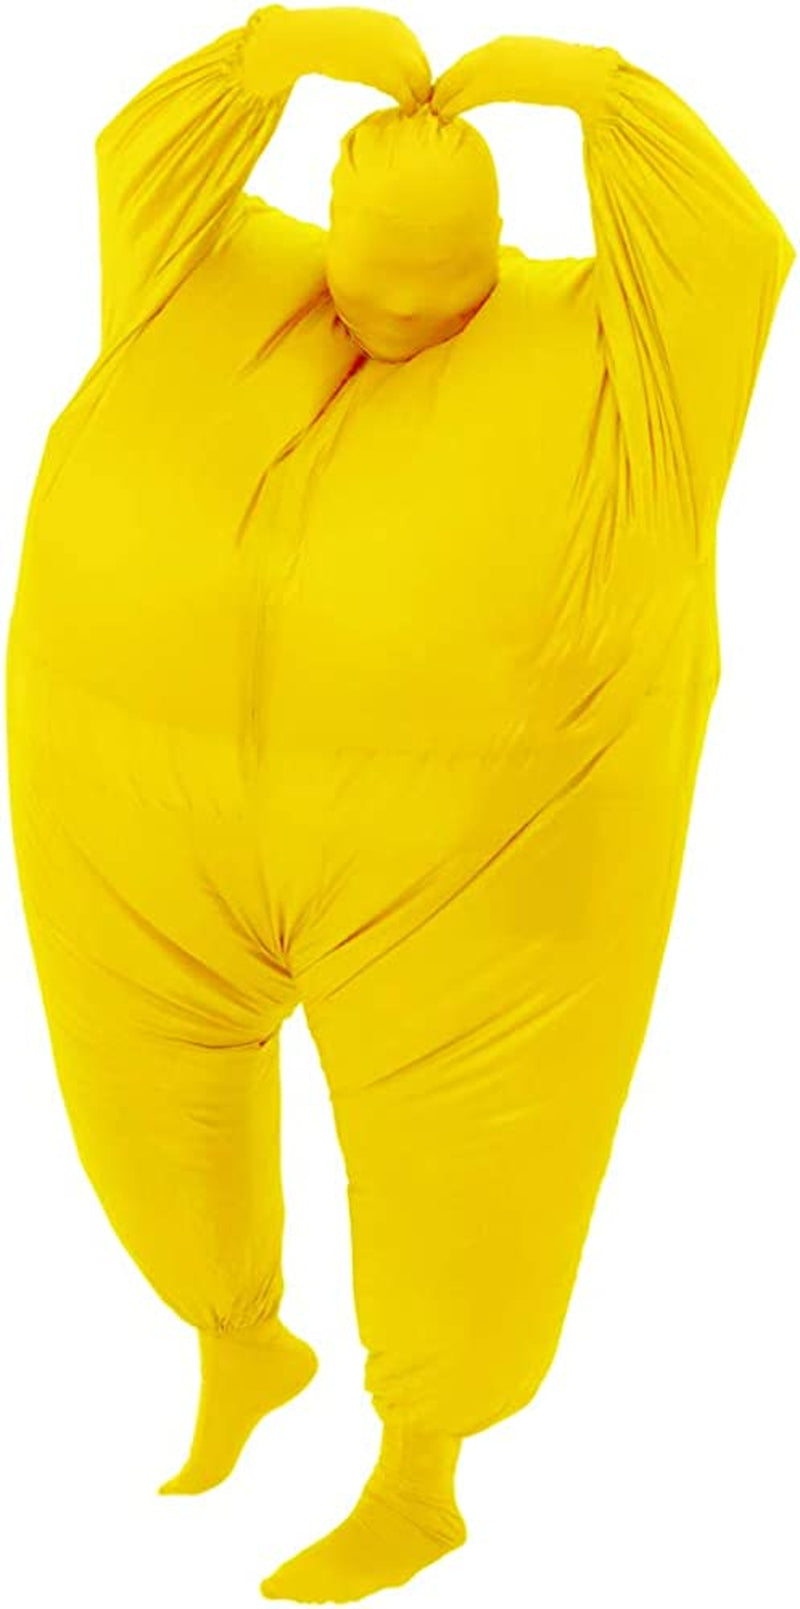 RHYTHMARTS Inflatable Costume Full Body Suit Halloween Christmas Costumes Fancy Dress Adult  RHYTHMARTS Yellow  